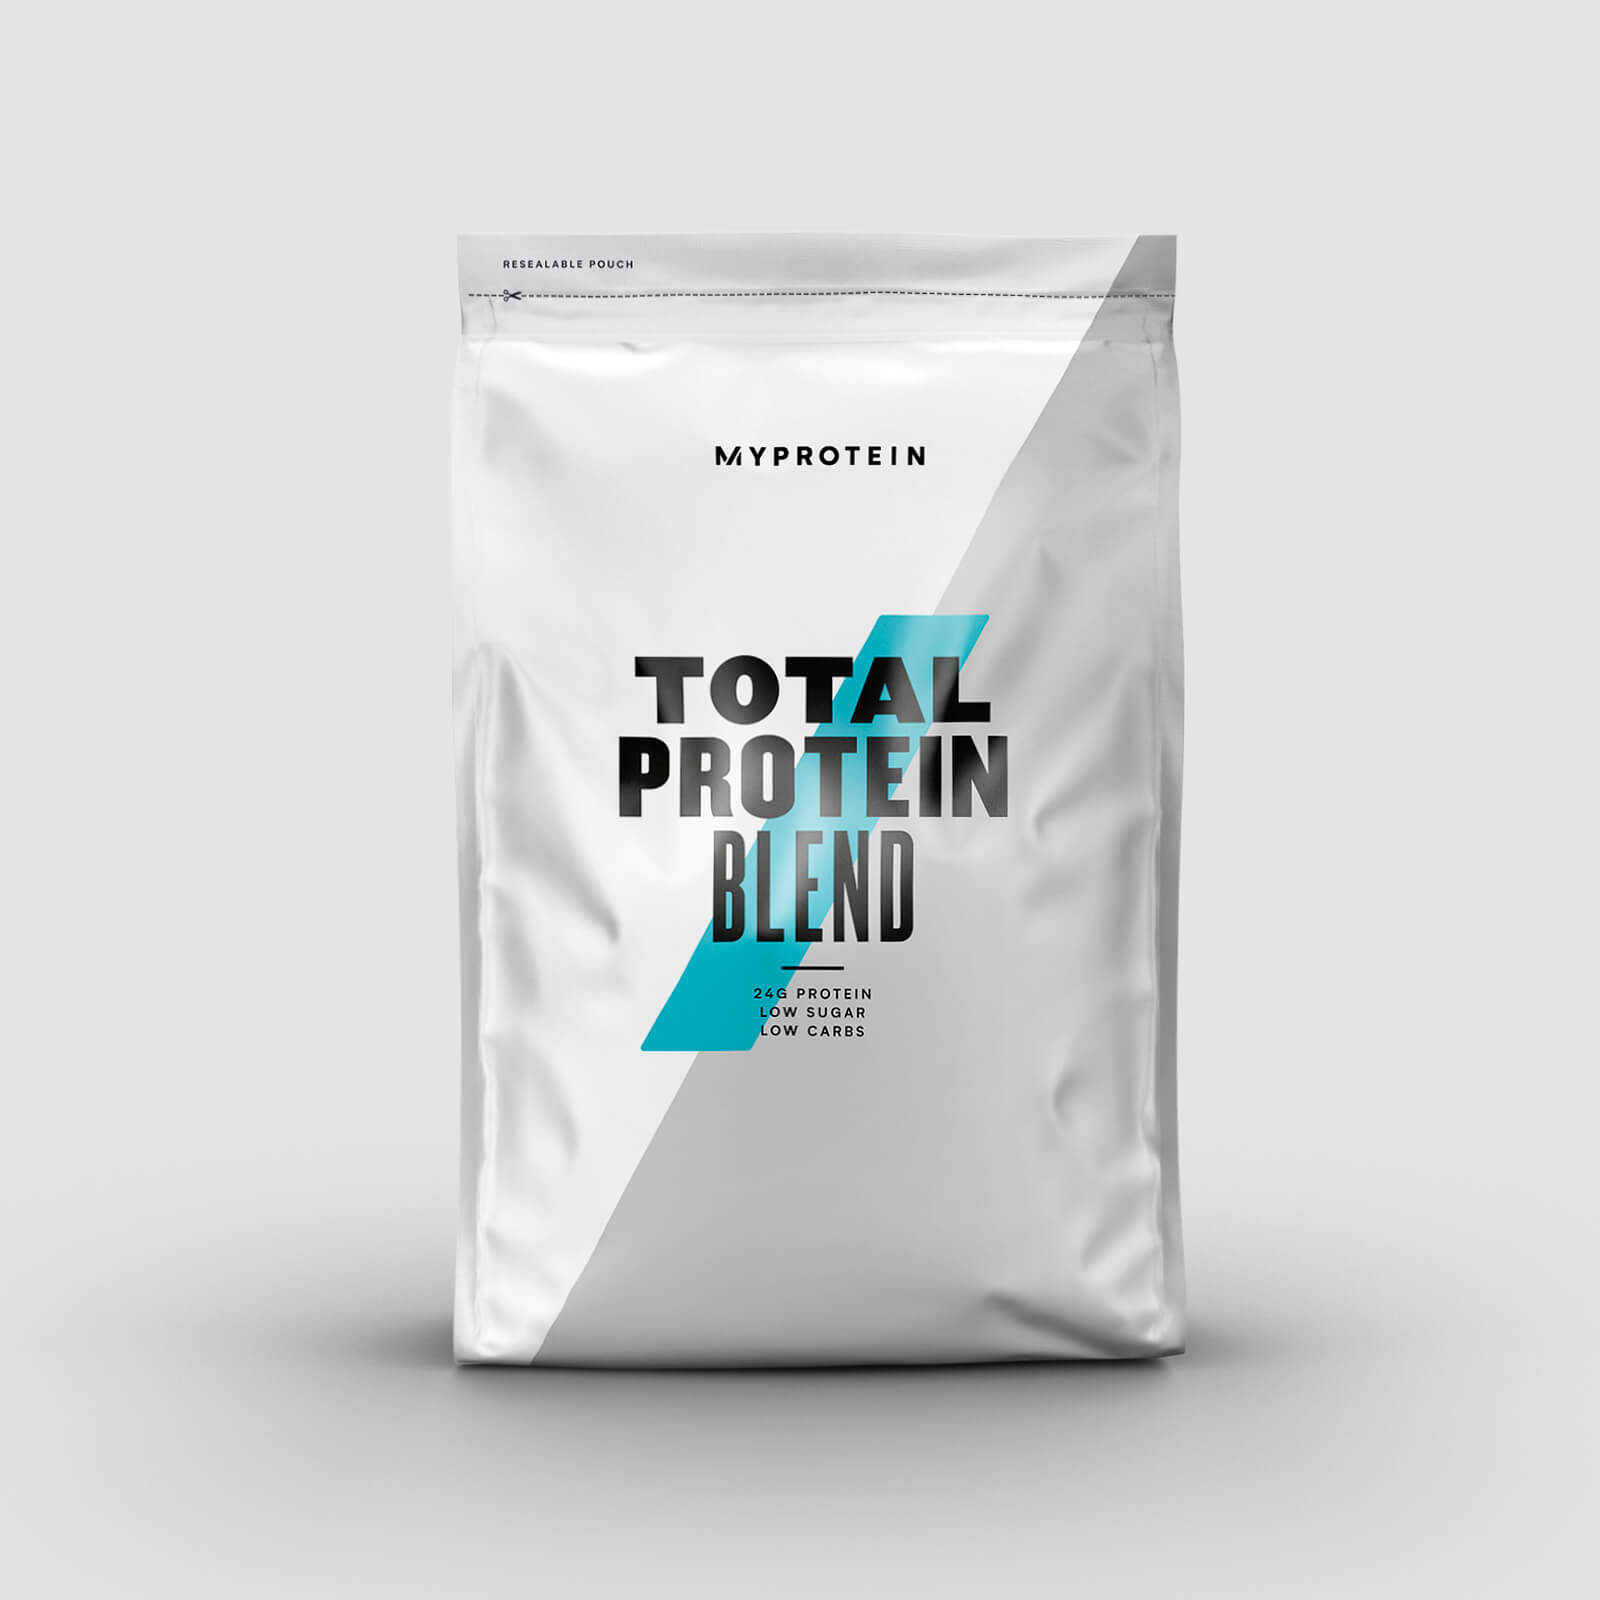 Myprotein Total Protein Blend - 1kg - Chocolate Smooth